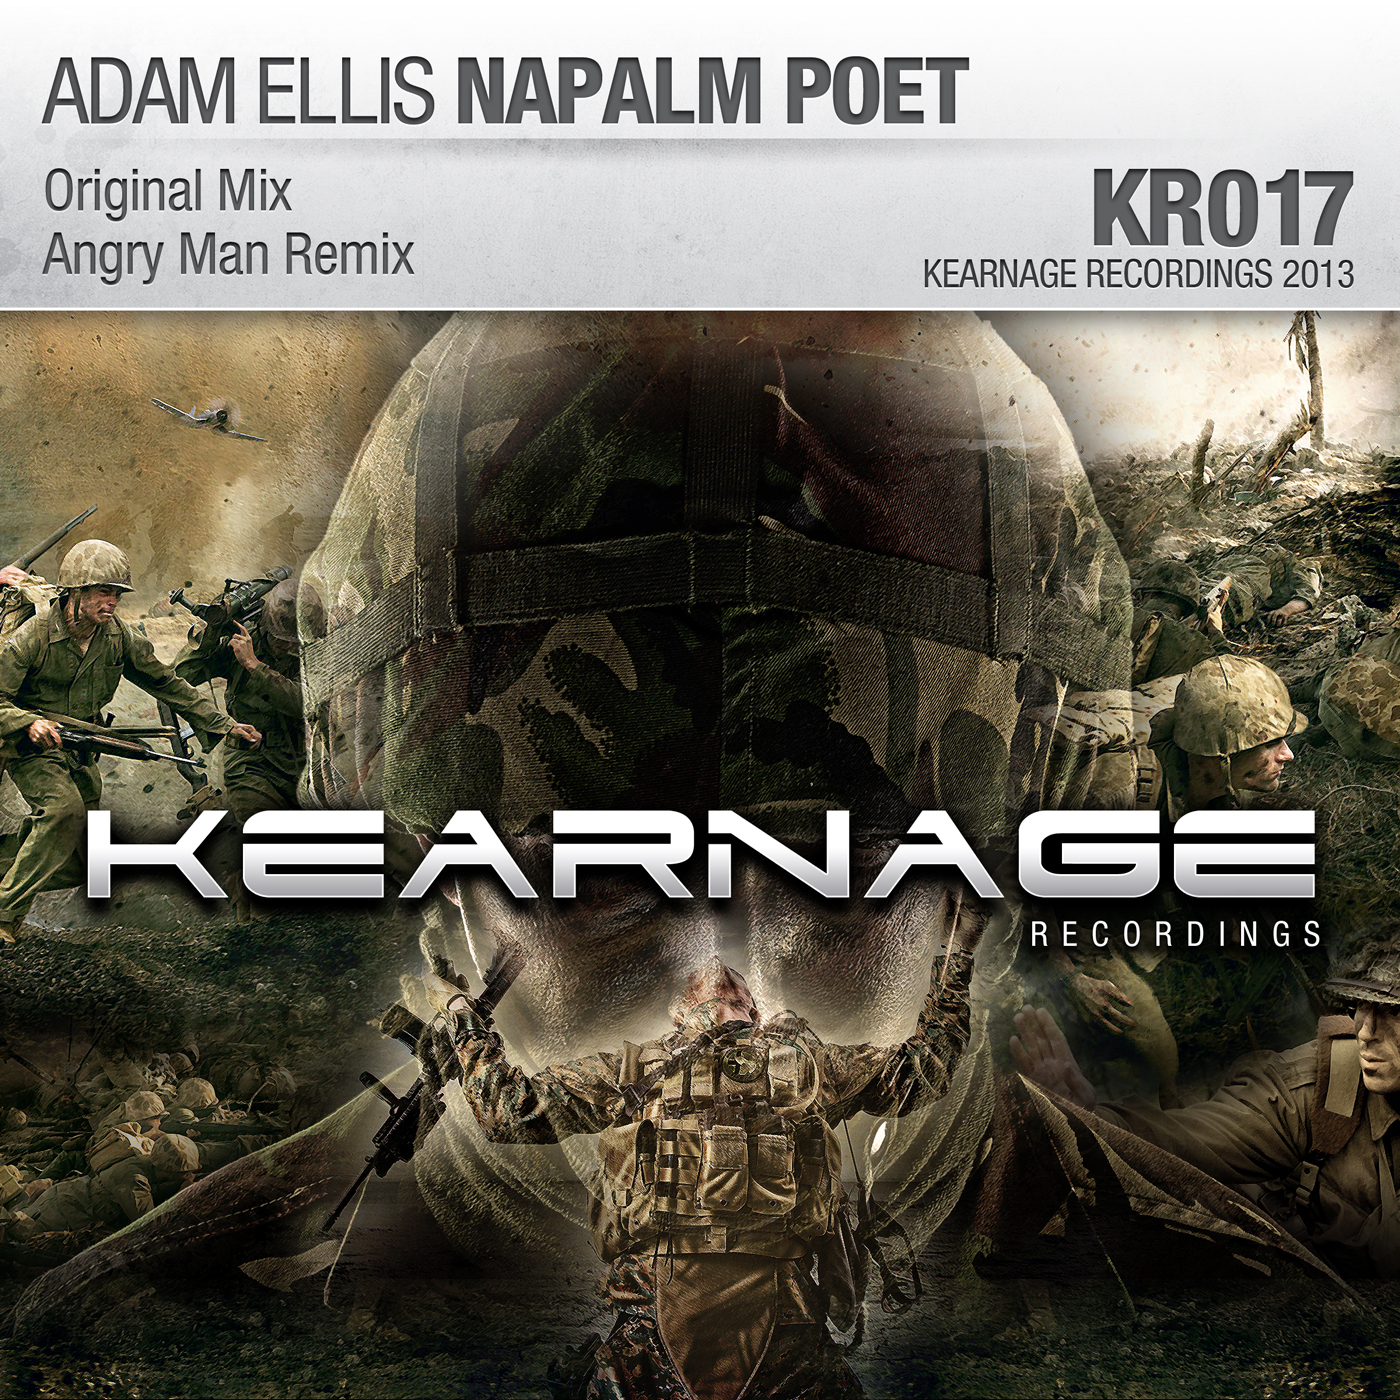 adam-ellis-napalm-poet-original-mix-kearnage-recordings-youredm.jpg